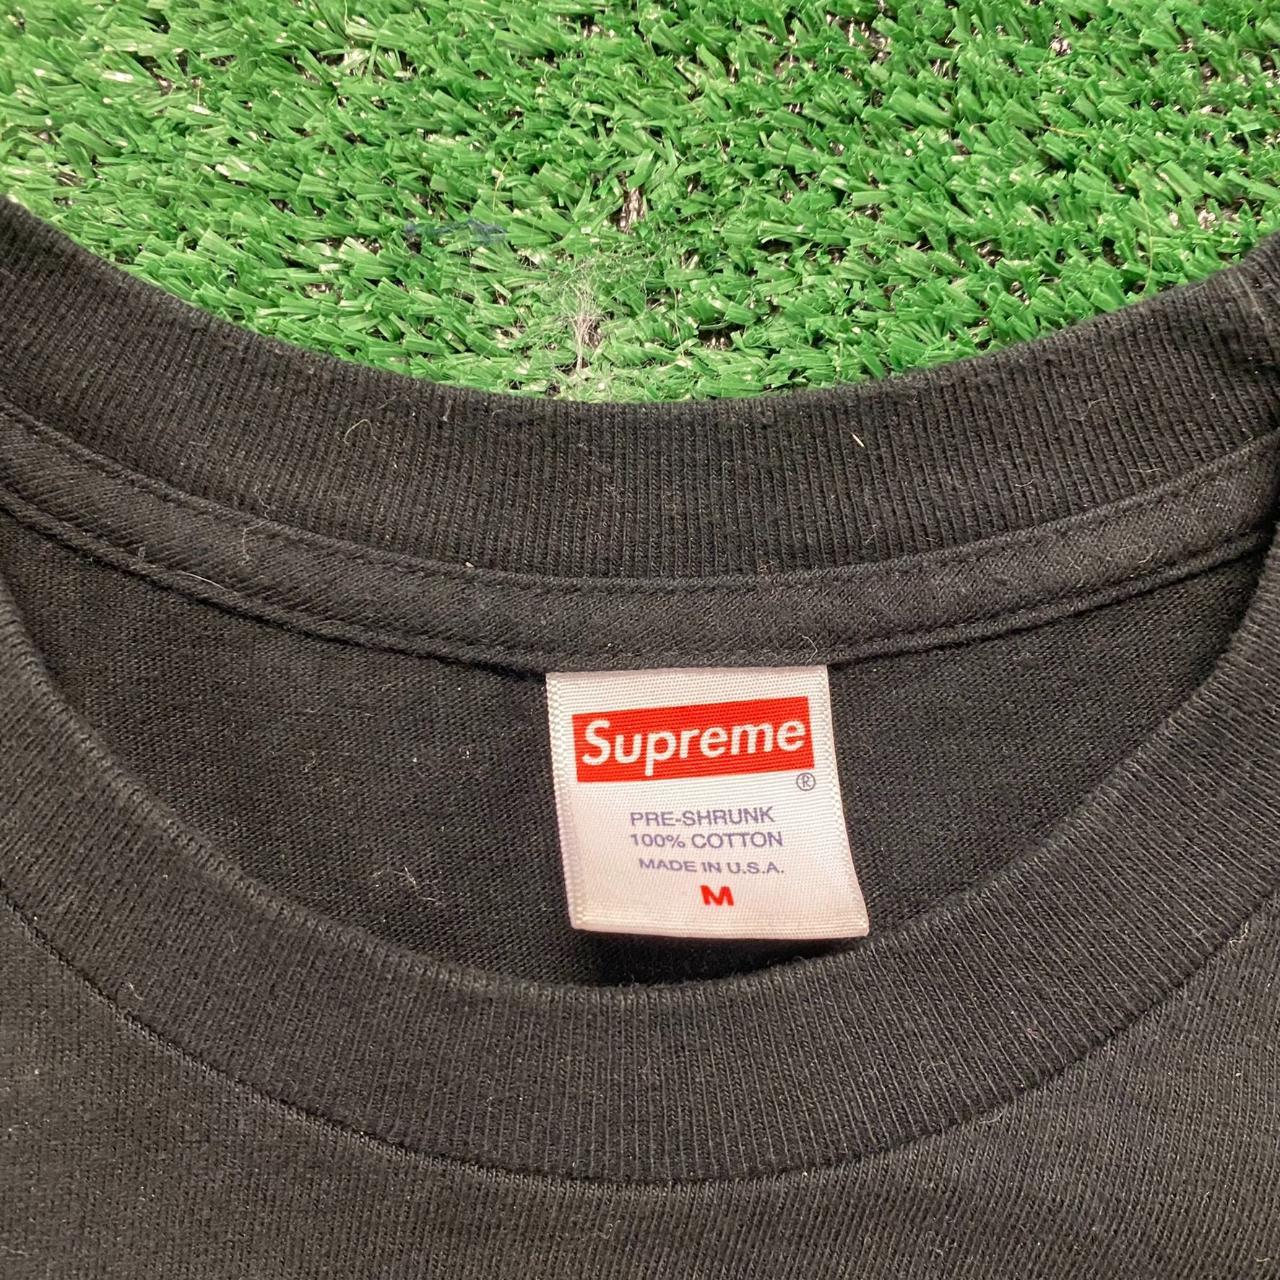 Supreme I'm Not Sorry Bear Punk Emo T-Shirt, Size